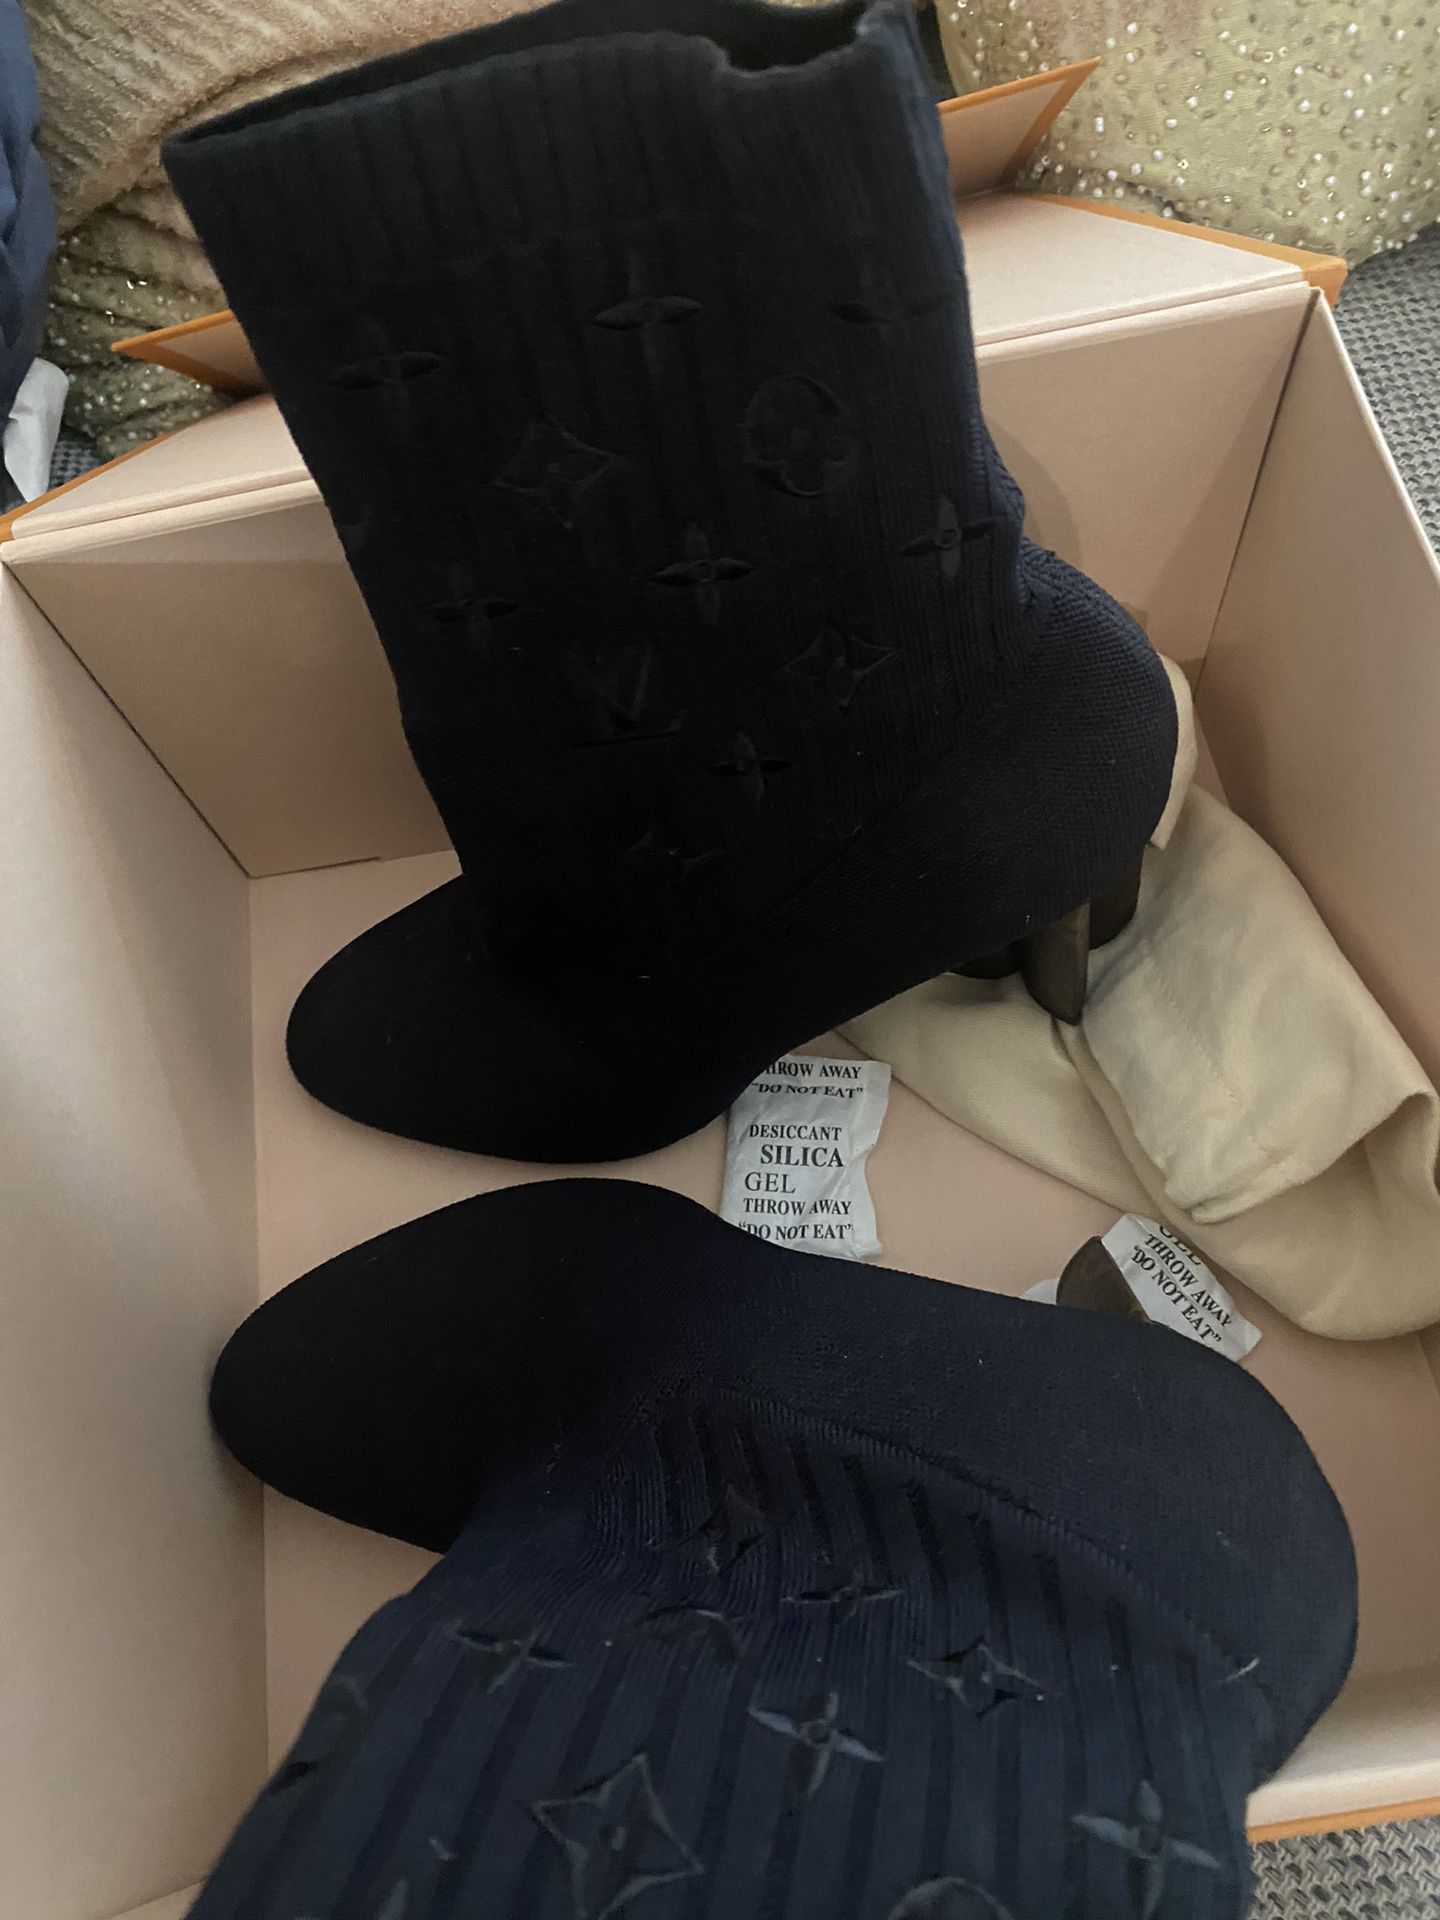 Shop Louis Vuitton Silhouette ankle boot (1A855E 1A855G, 1A8552 1A8554  1A8556 1A8558 1A855C, STIVALETTO SILHOUETTE, 1A855A) by Mikrie